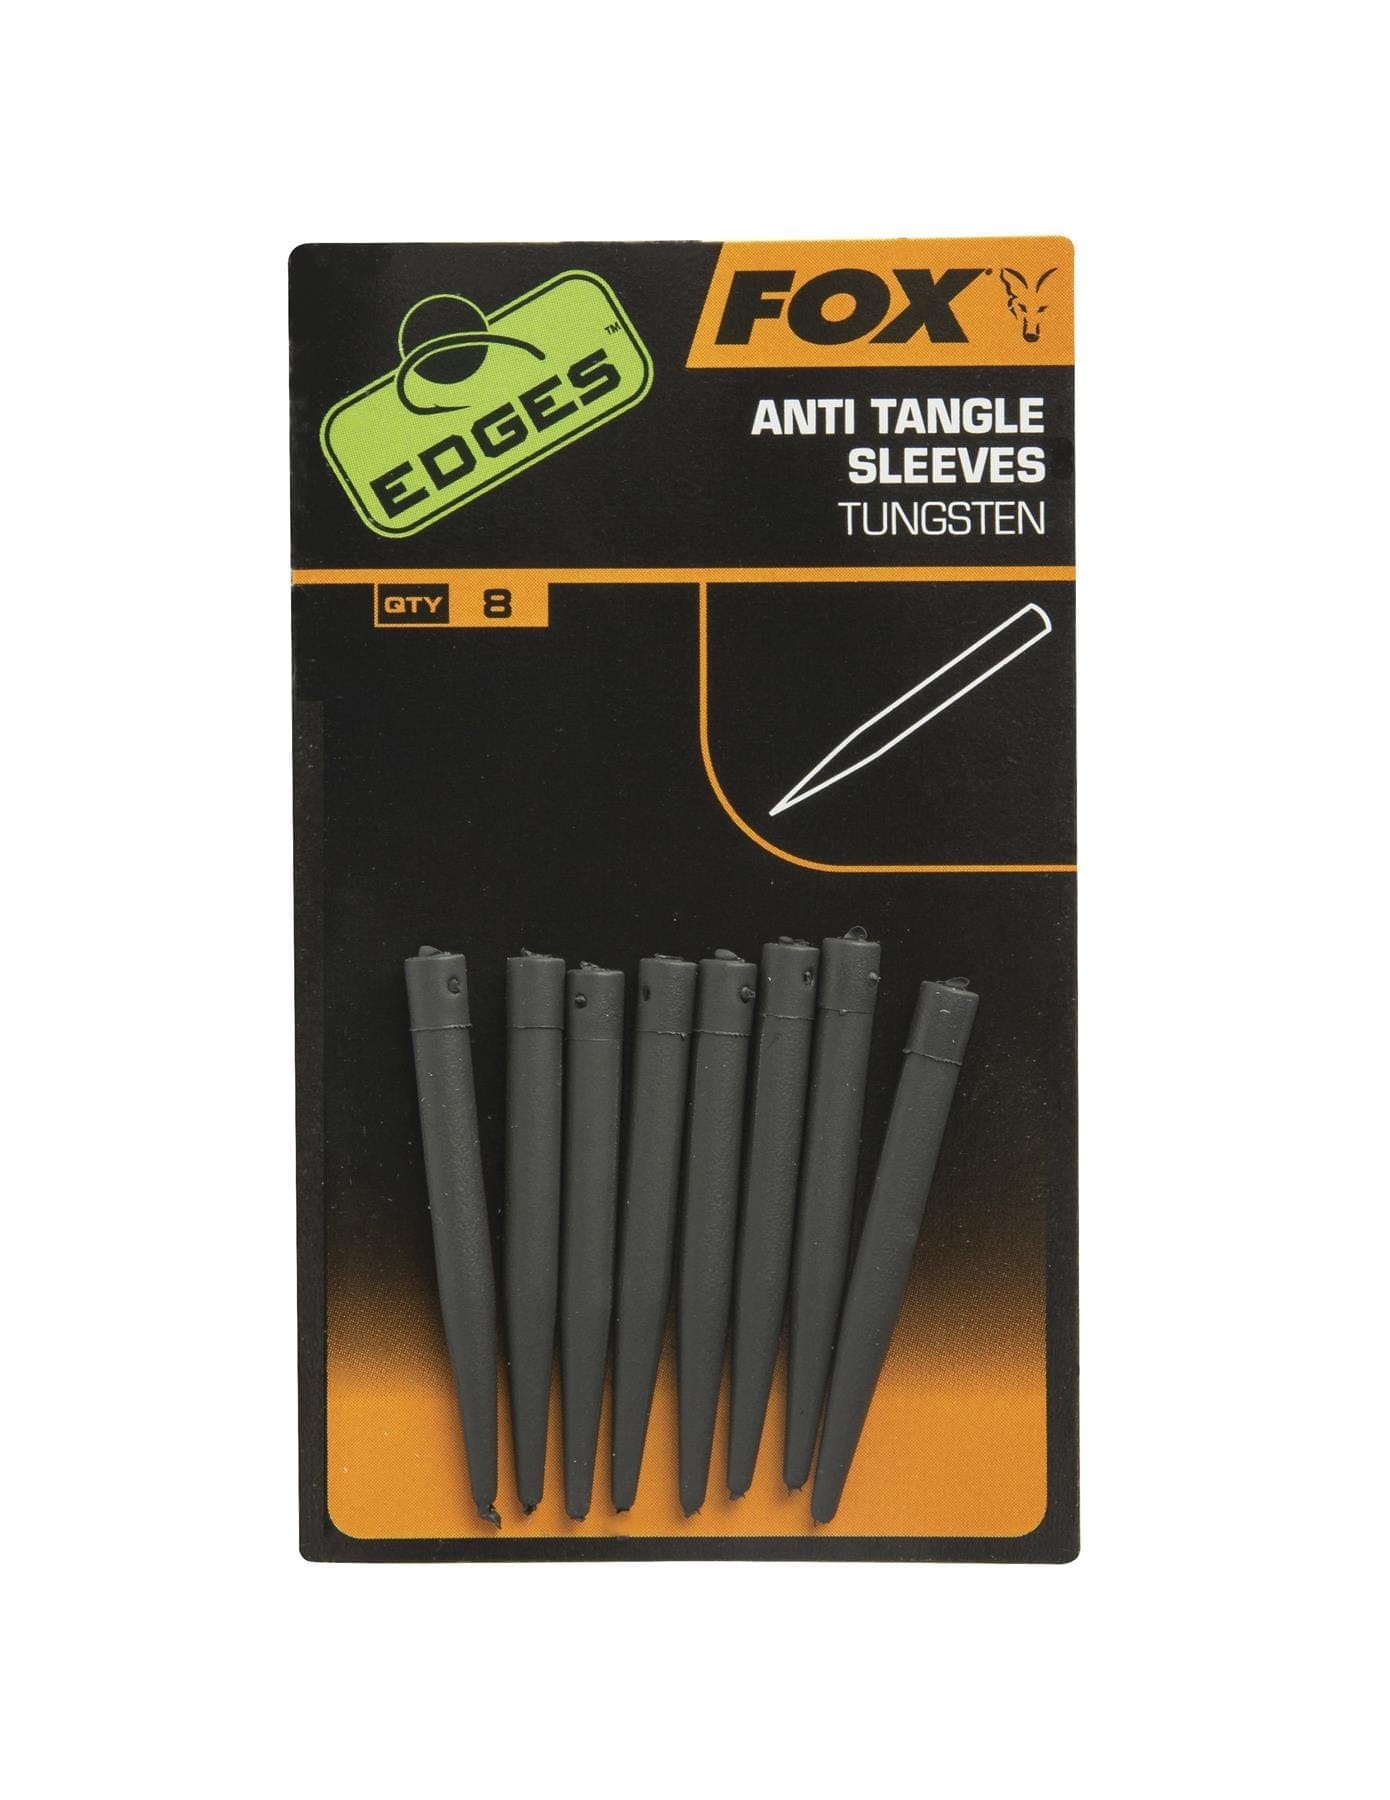 FOX Edges Anti tangle Sleeves - Tungsten - 8pk.